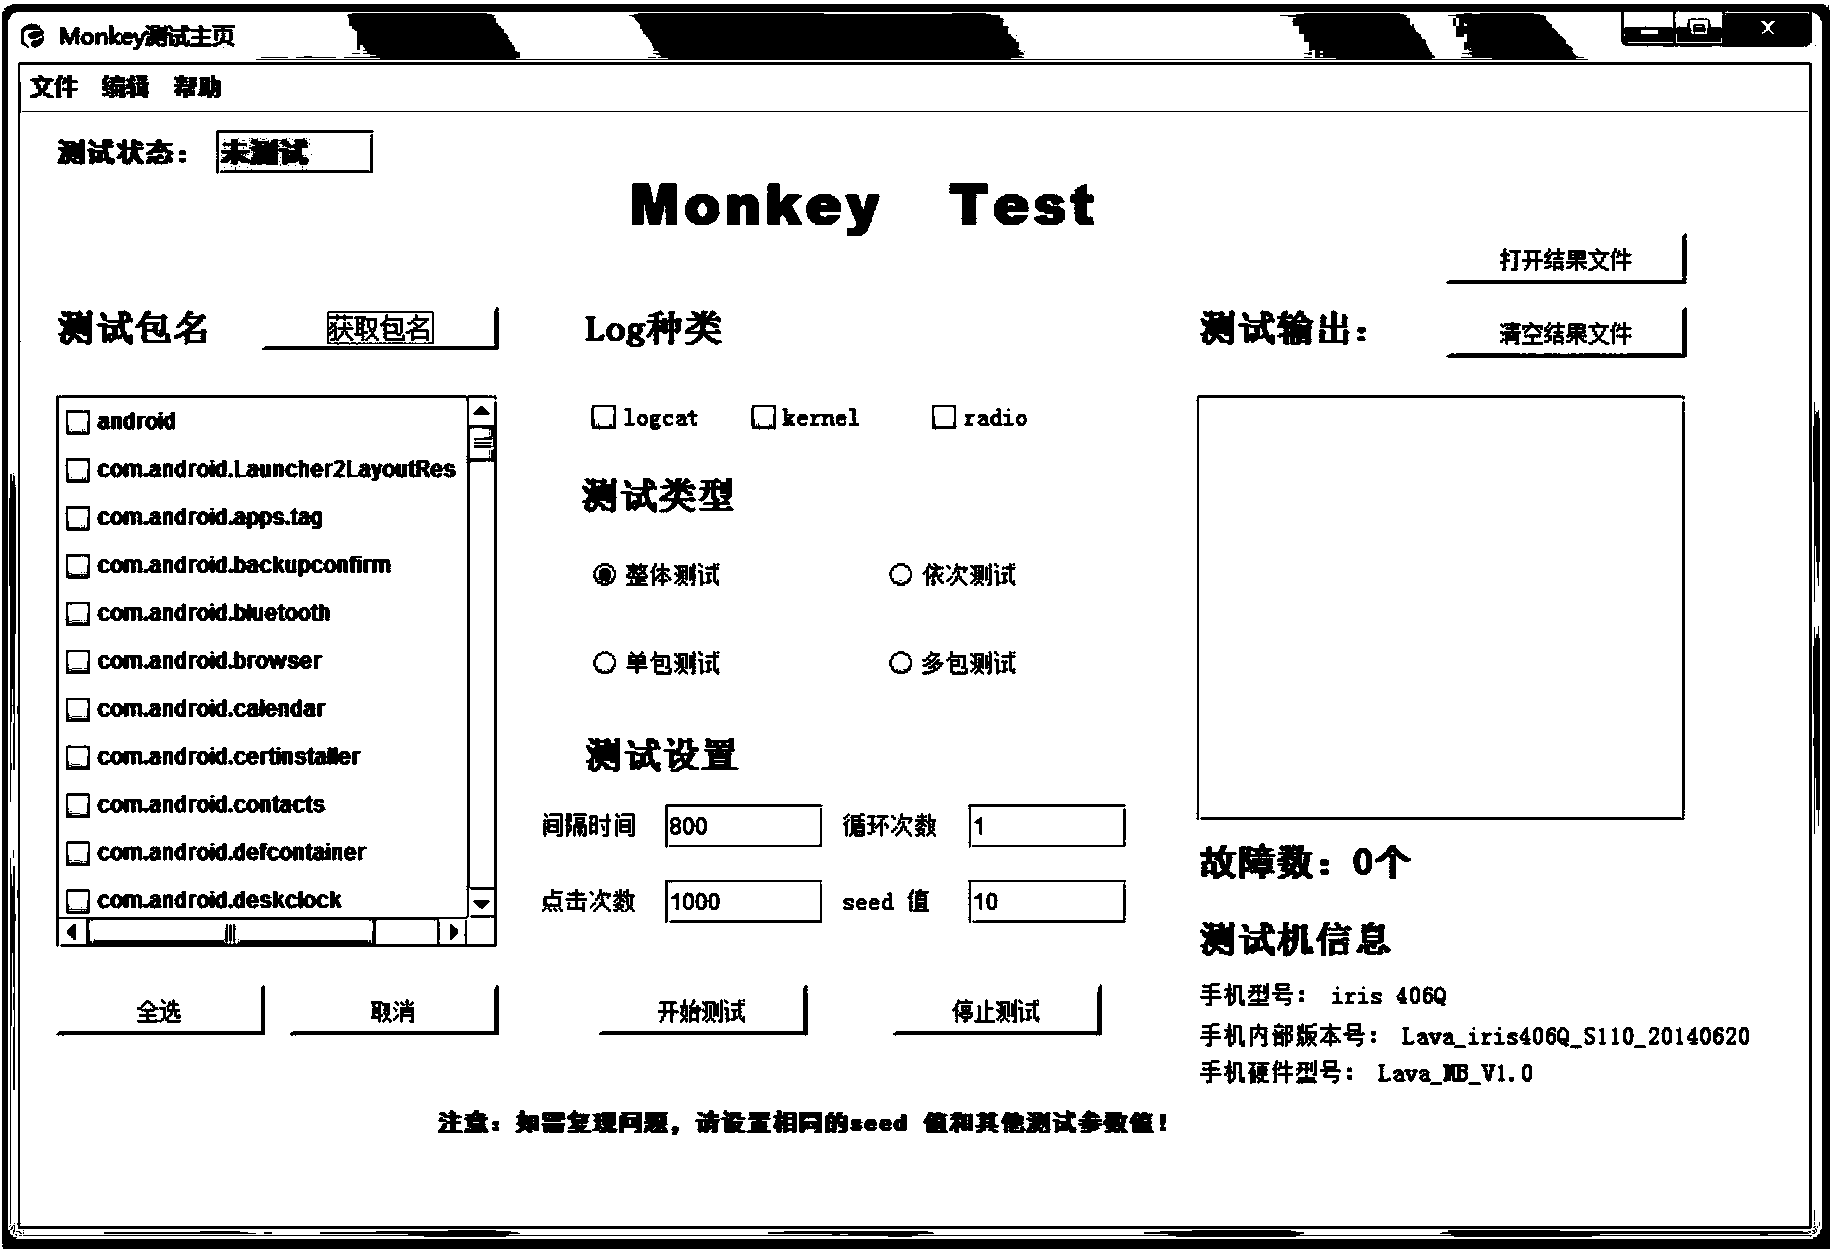 Monkey test system and method